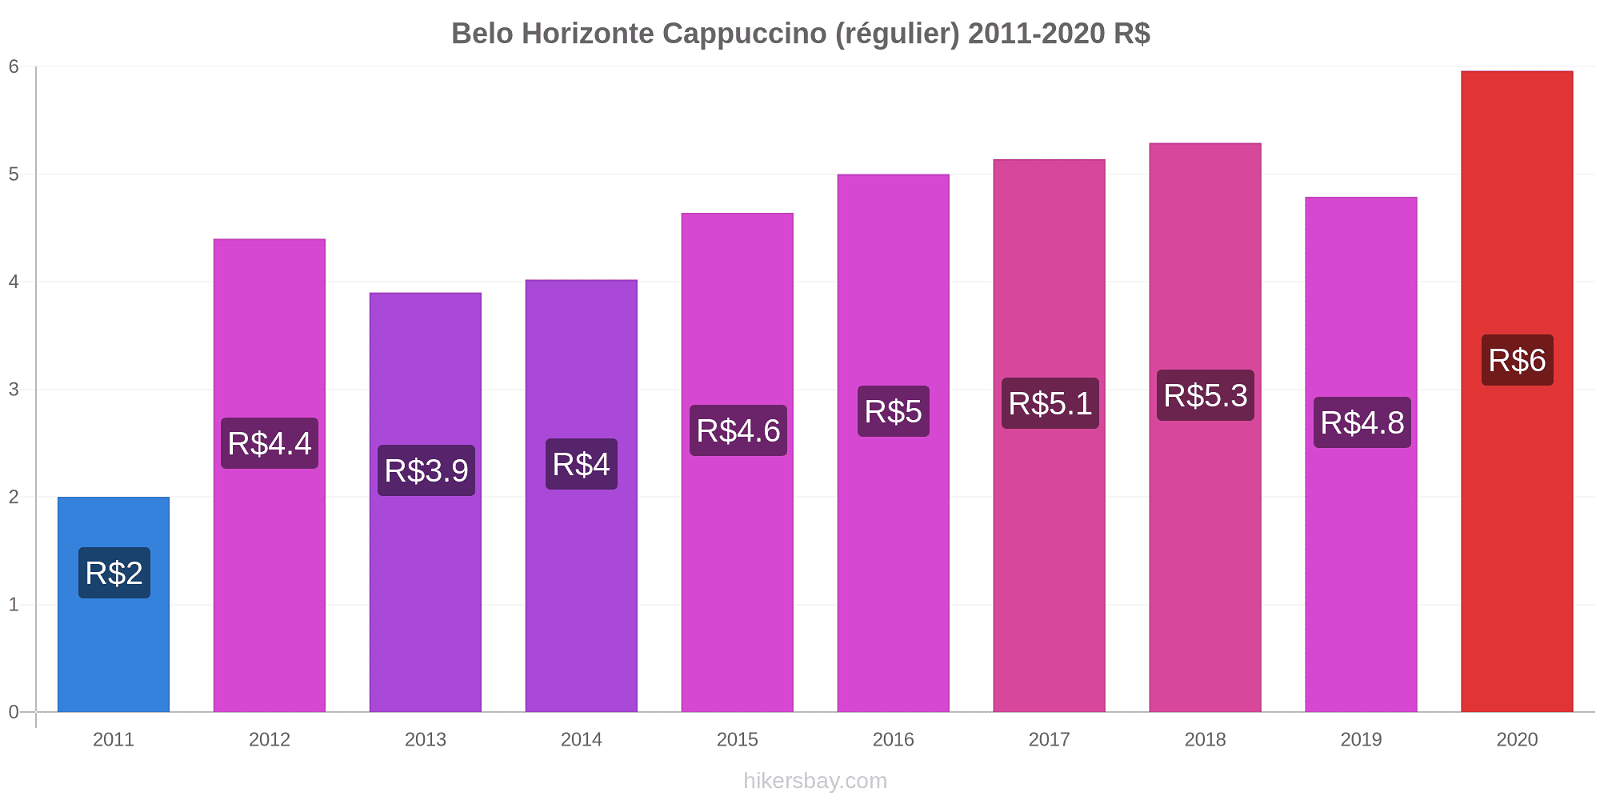 Belo Horizonte changements de prix Cappuccino (régulier) hikersbay.com